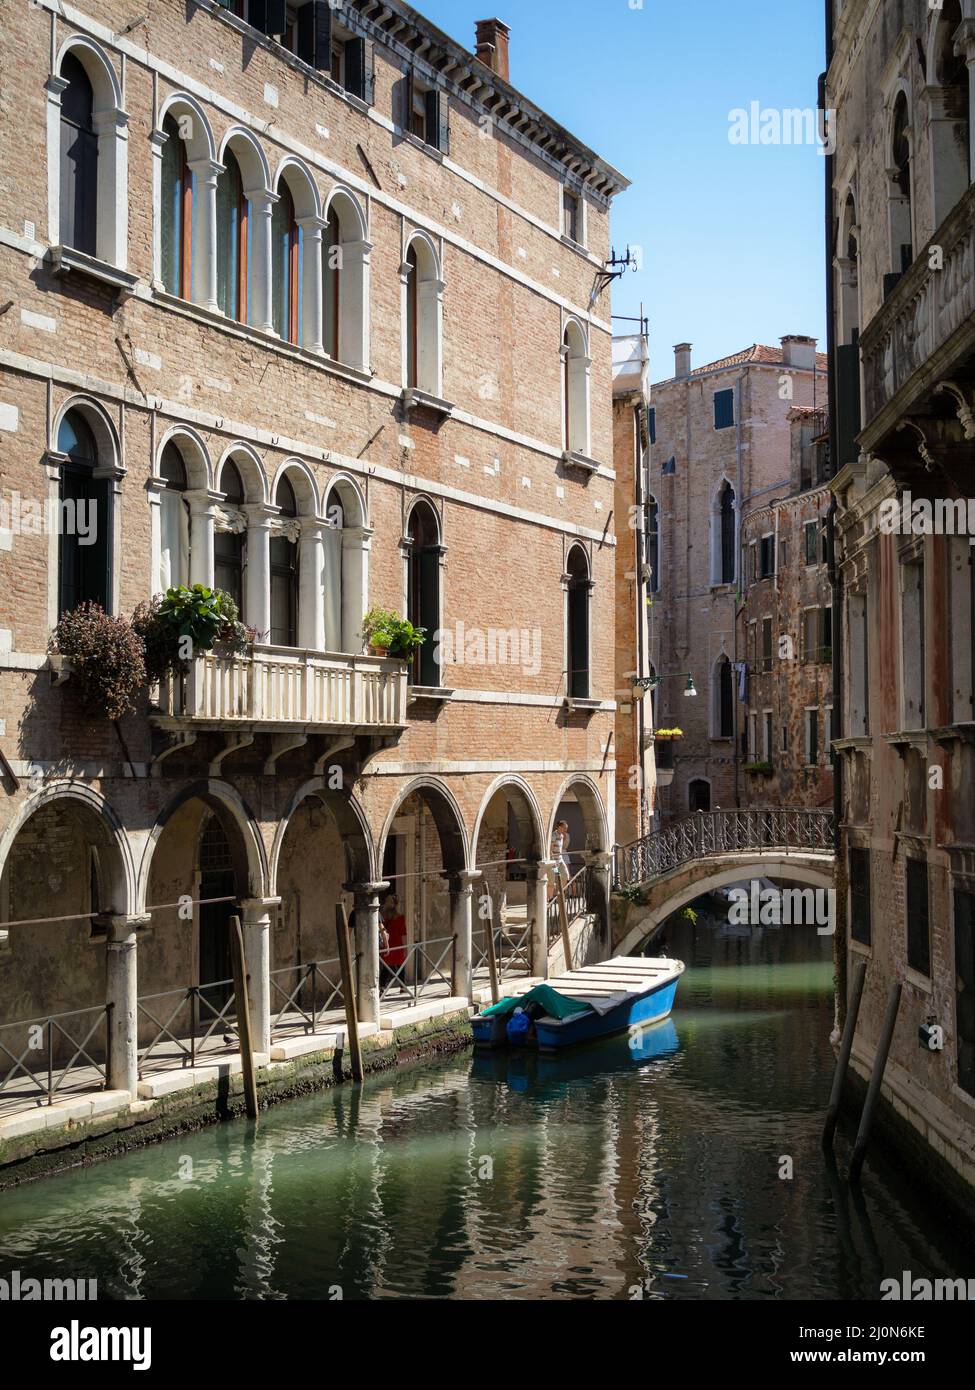 Quaint canal in historic Venice Stock Photo